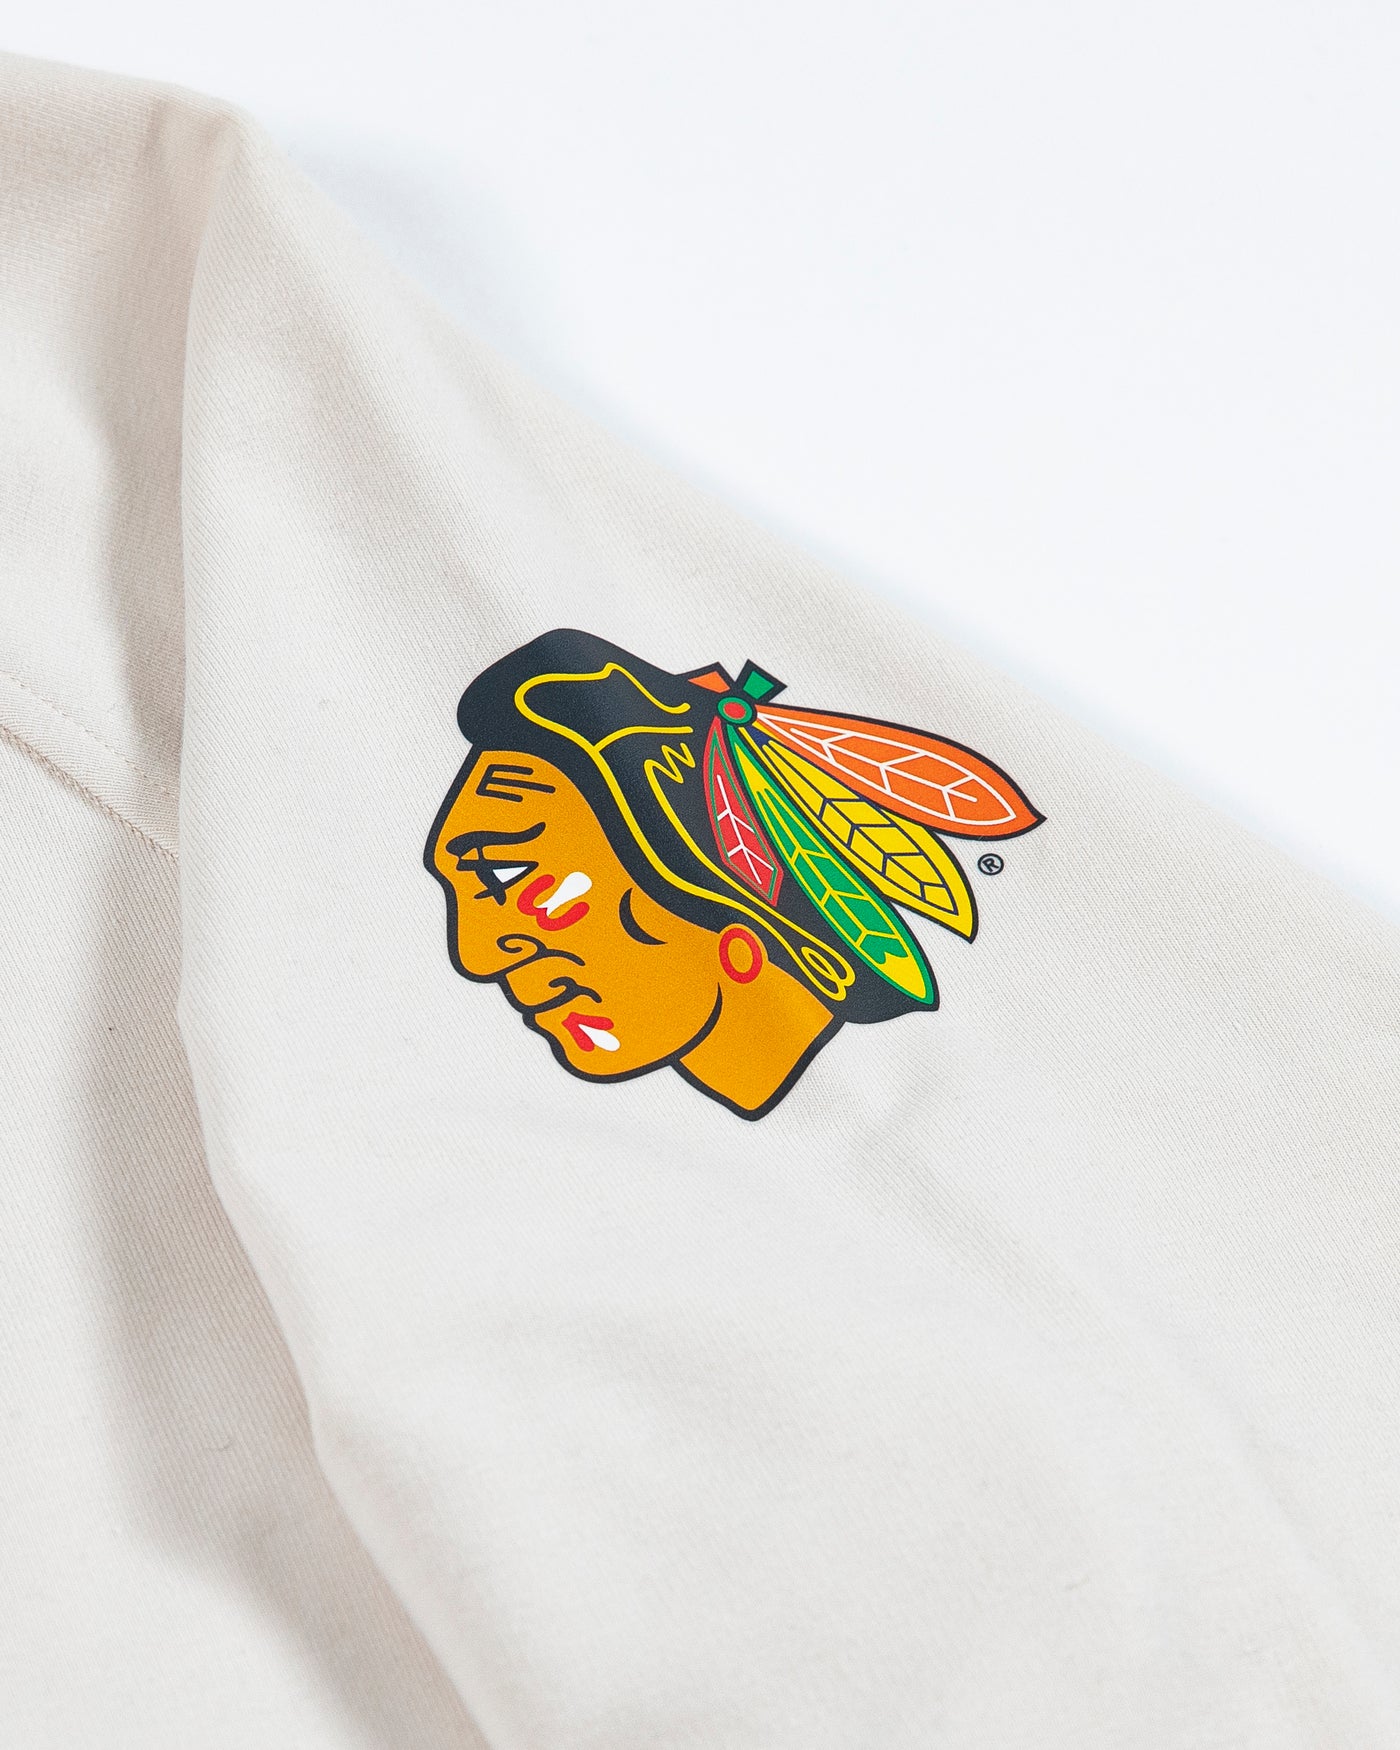 white lululemon crewneck sweater with Chicago Blackhawks primary logo on left shoulder - detail lay flat